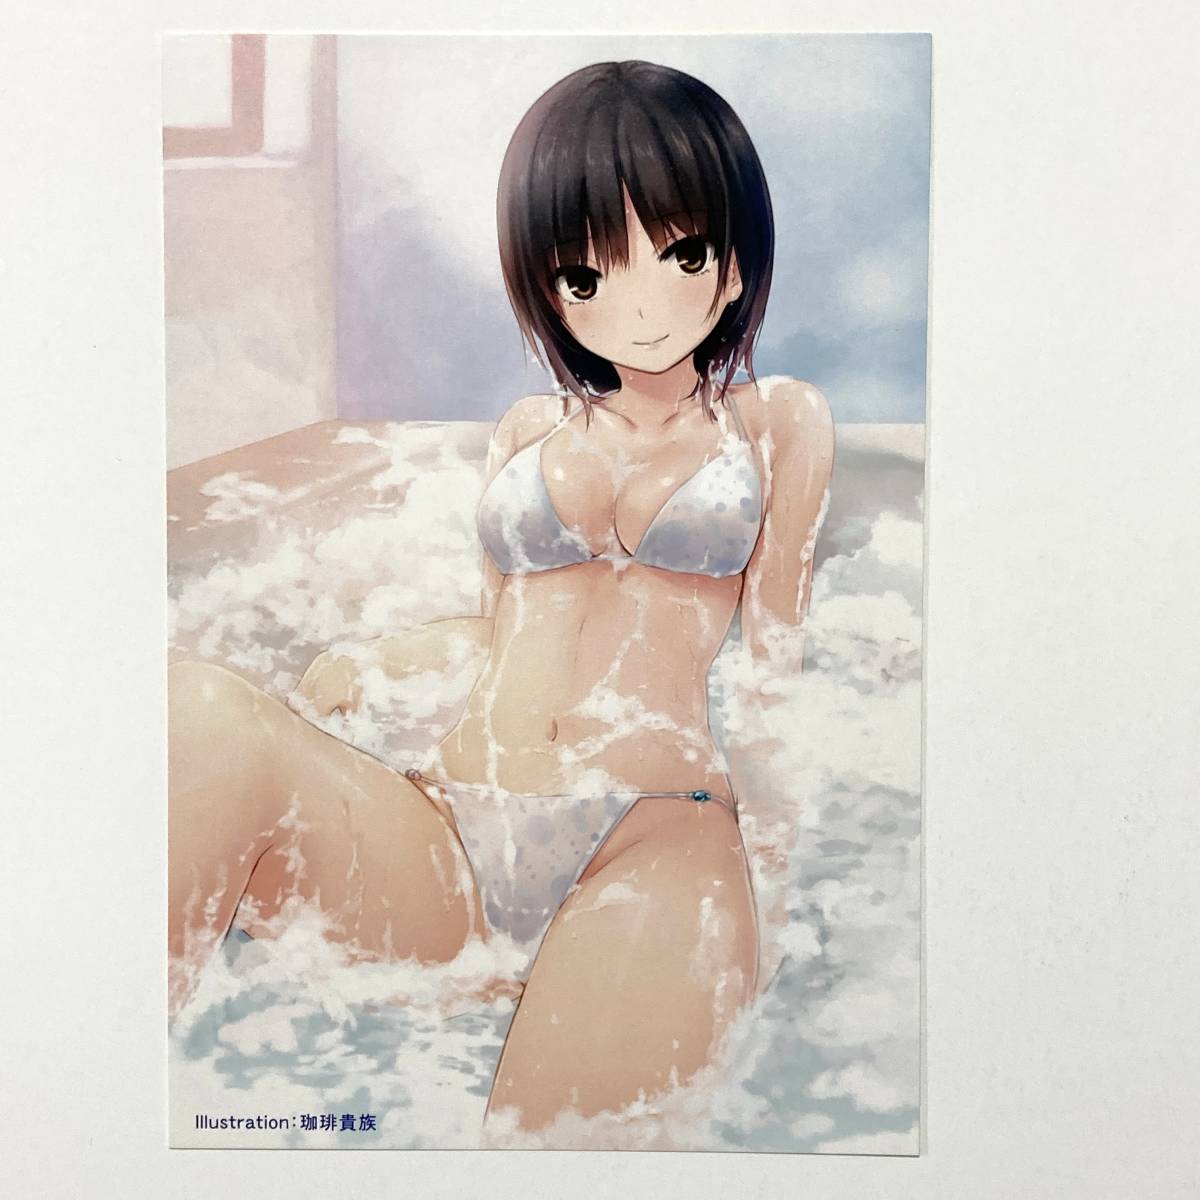 [ Coffee Kizoku * not for sale postcard ] Aoyama .. Aoyama san Blue Mountain coffee bean bath swimsuit bikini K-BOOKS Kei books po ska Z3